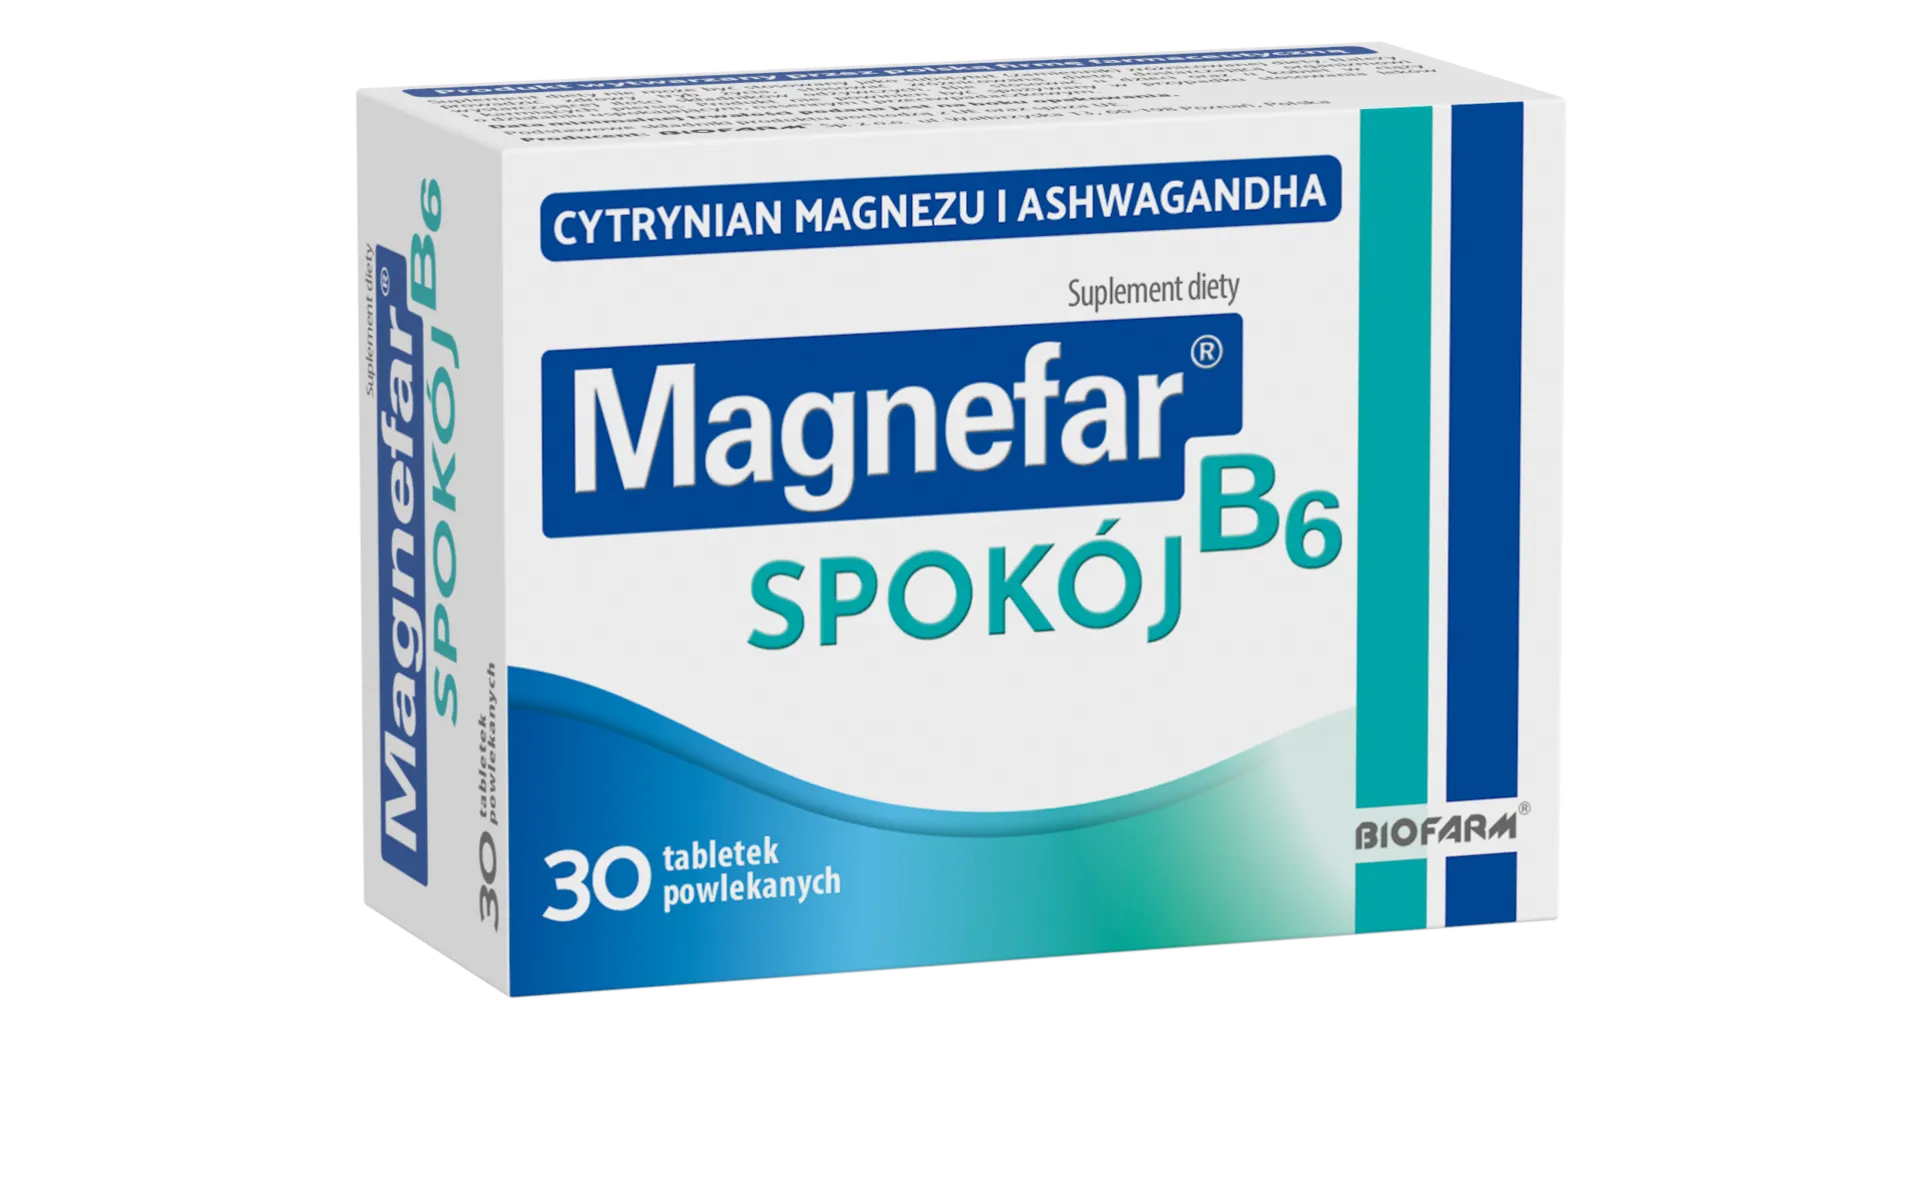 Magnefar B6 Spokój, suplement diety, 30 tabletek powlekanych